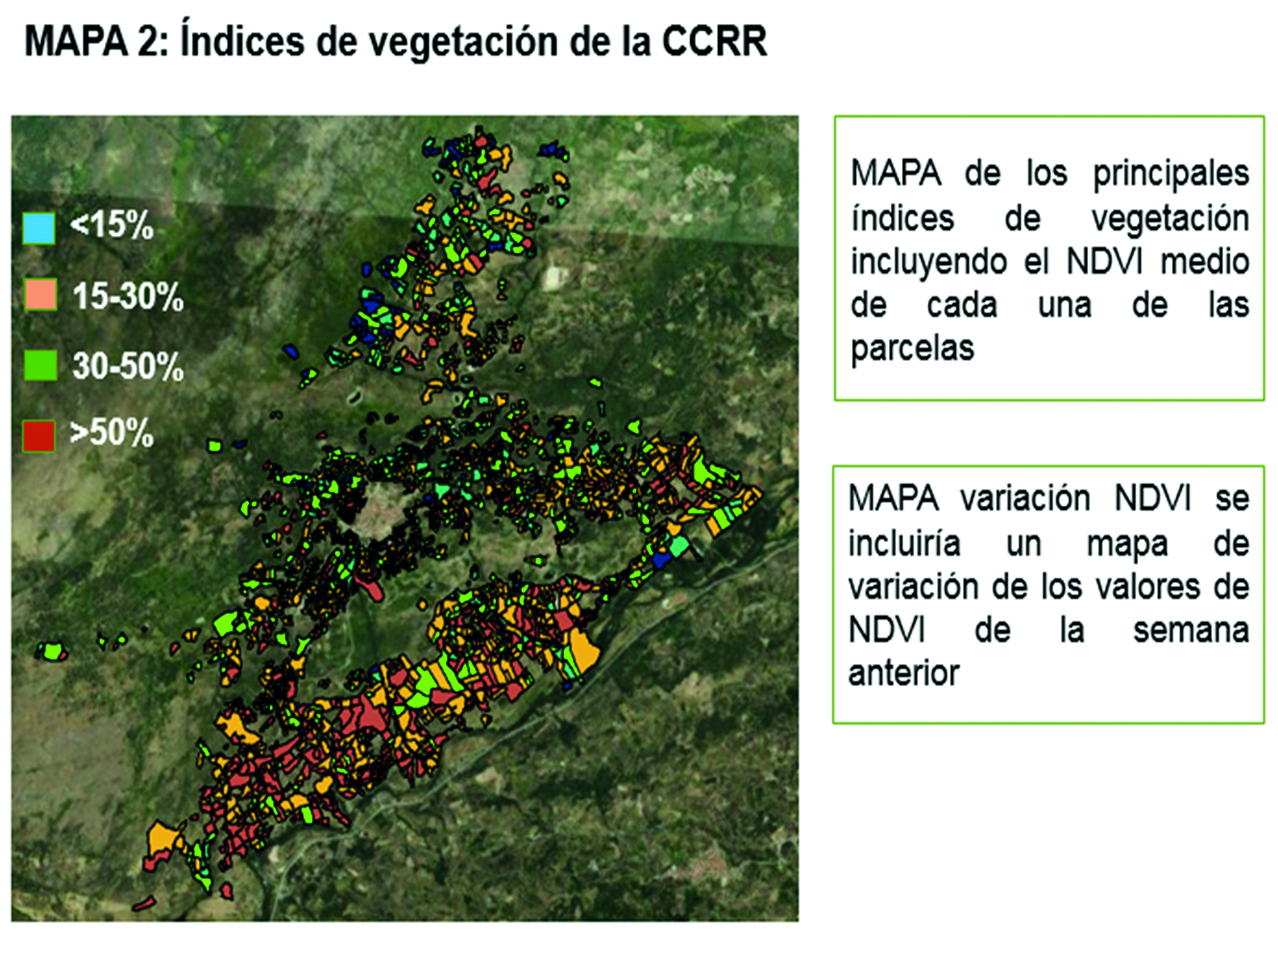 MAPA 2. INDICES DE VEGETACION DE LA CCRR